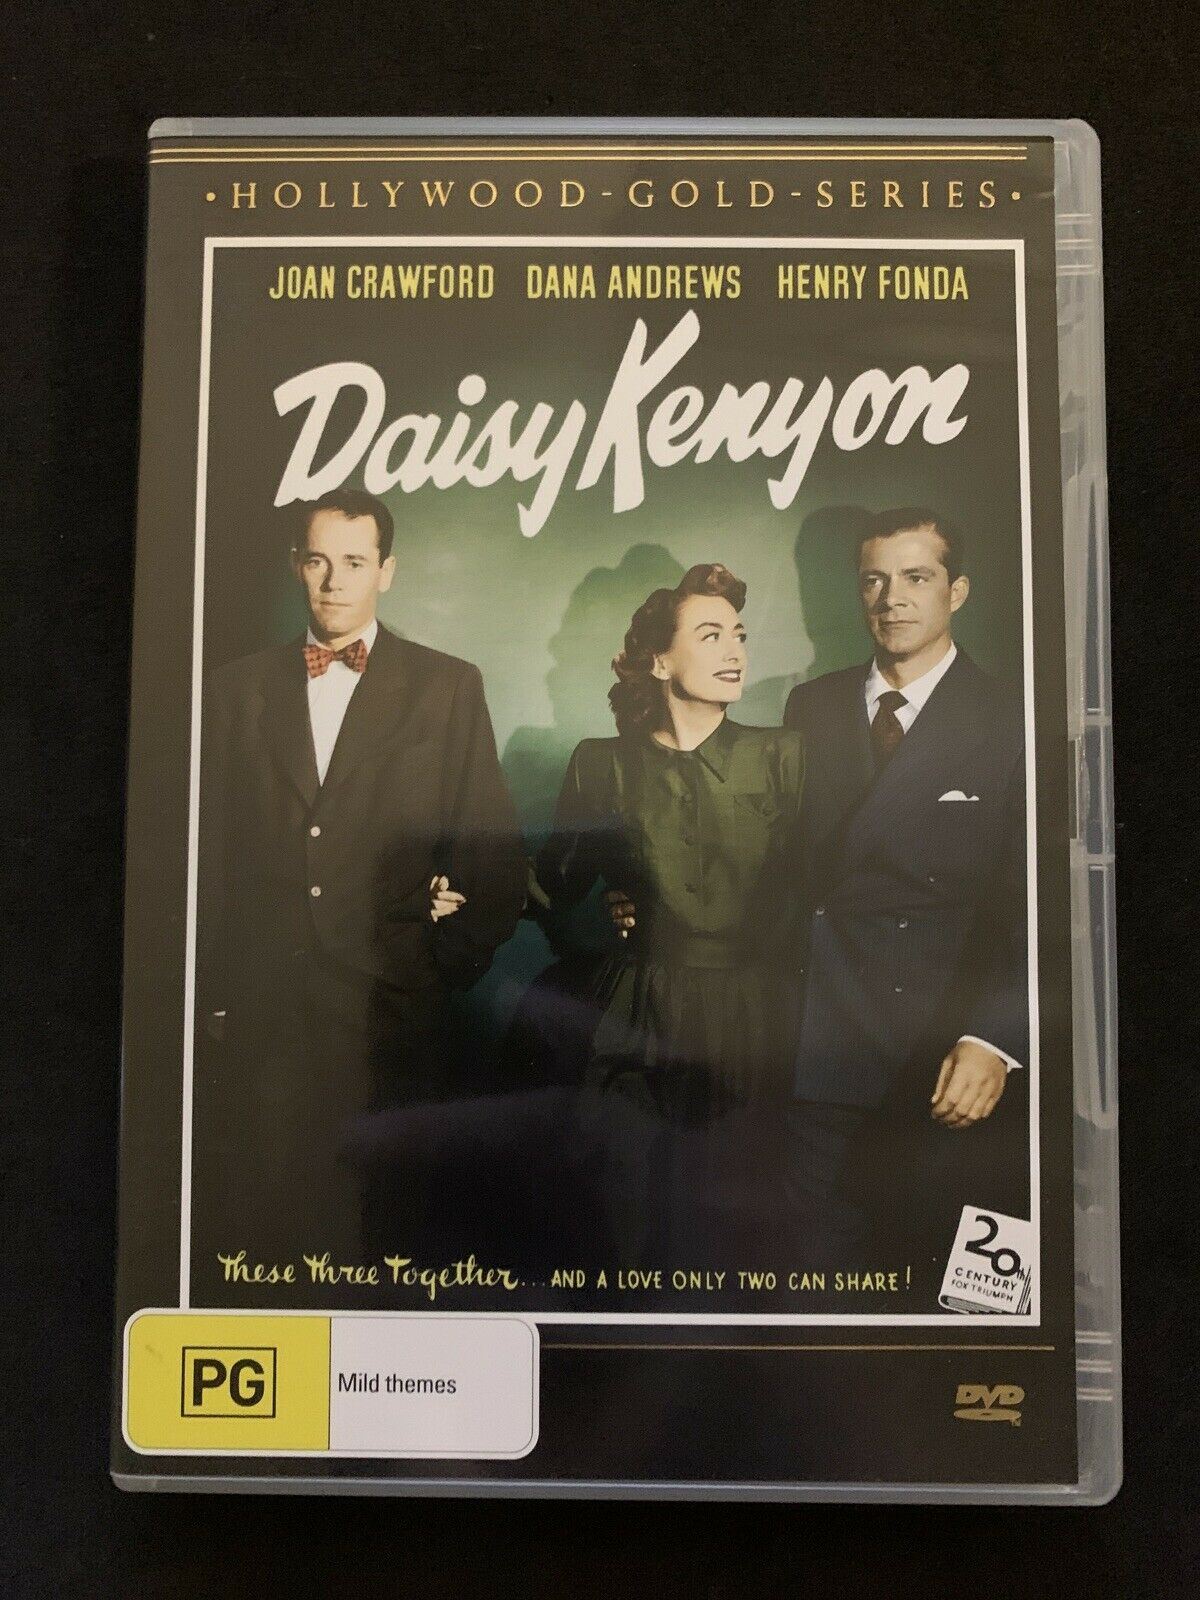 Daisy Kenyon (DVD, 1947) Joan Crawford, Dana Andrews, Henry Fonda - Region 4